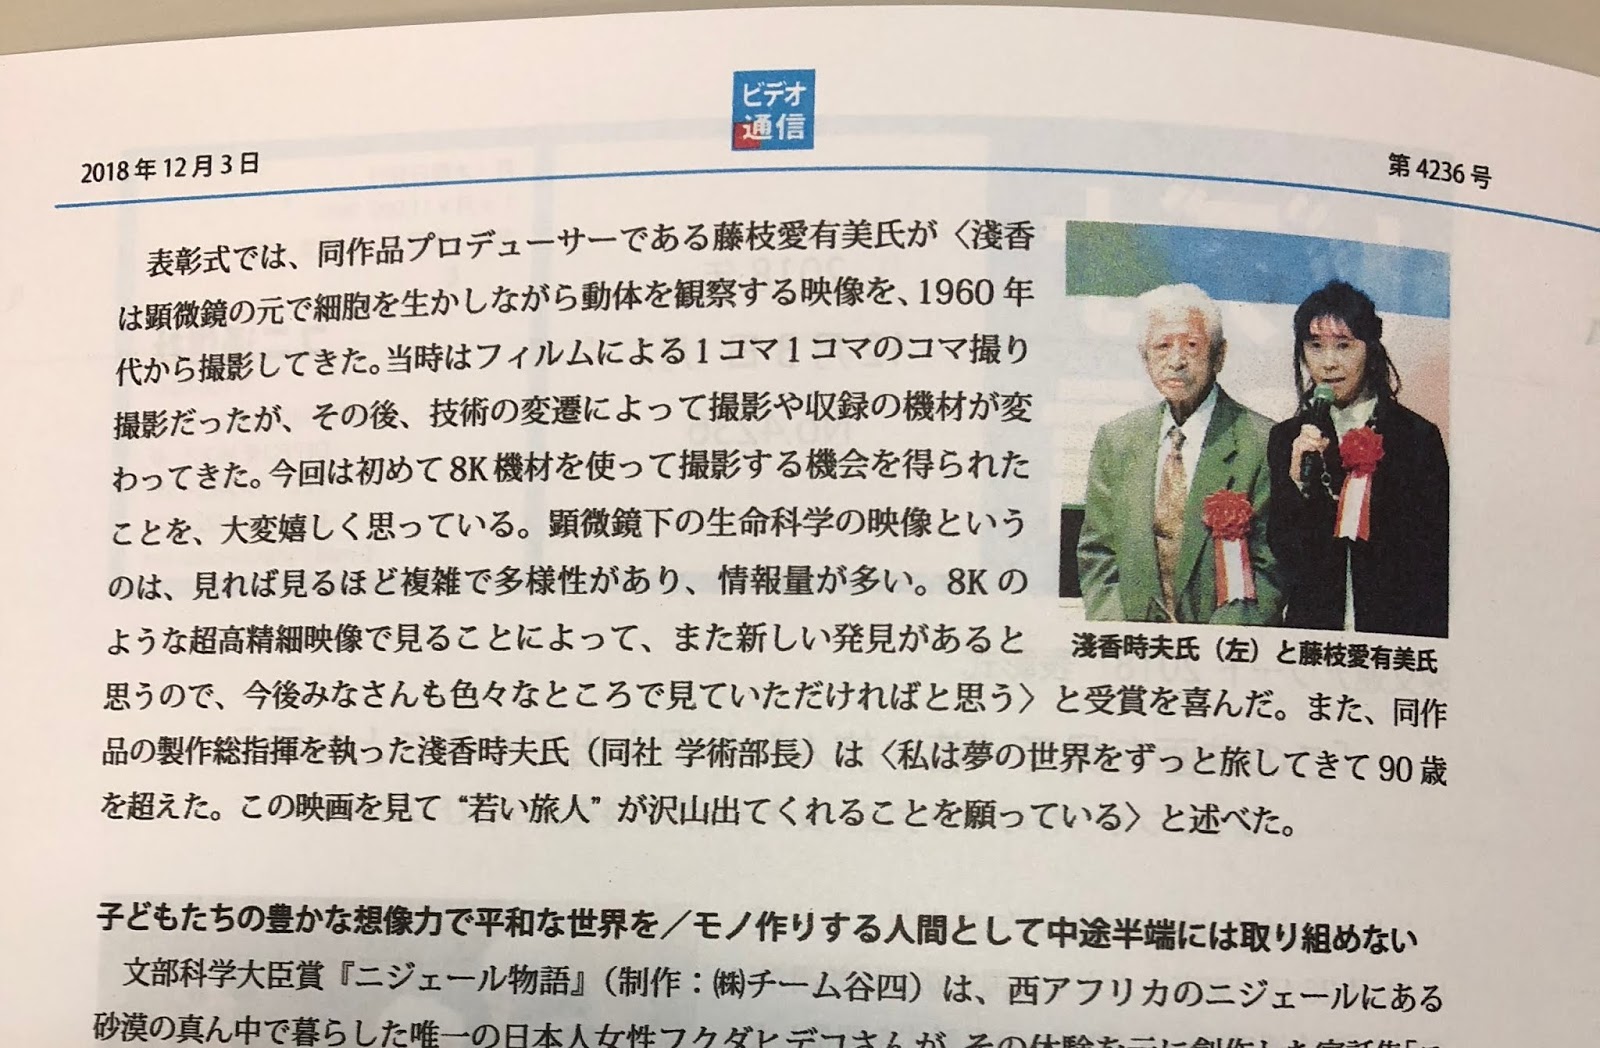 YONE Productionの日記: ユニ通信社のビデオ通信12月３日号に映文連 